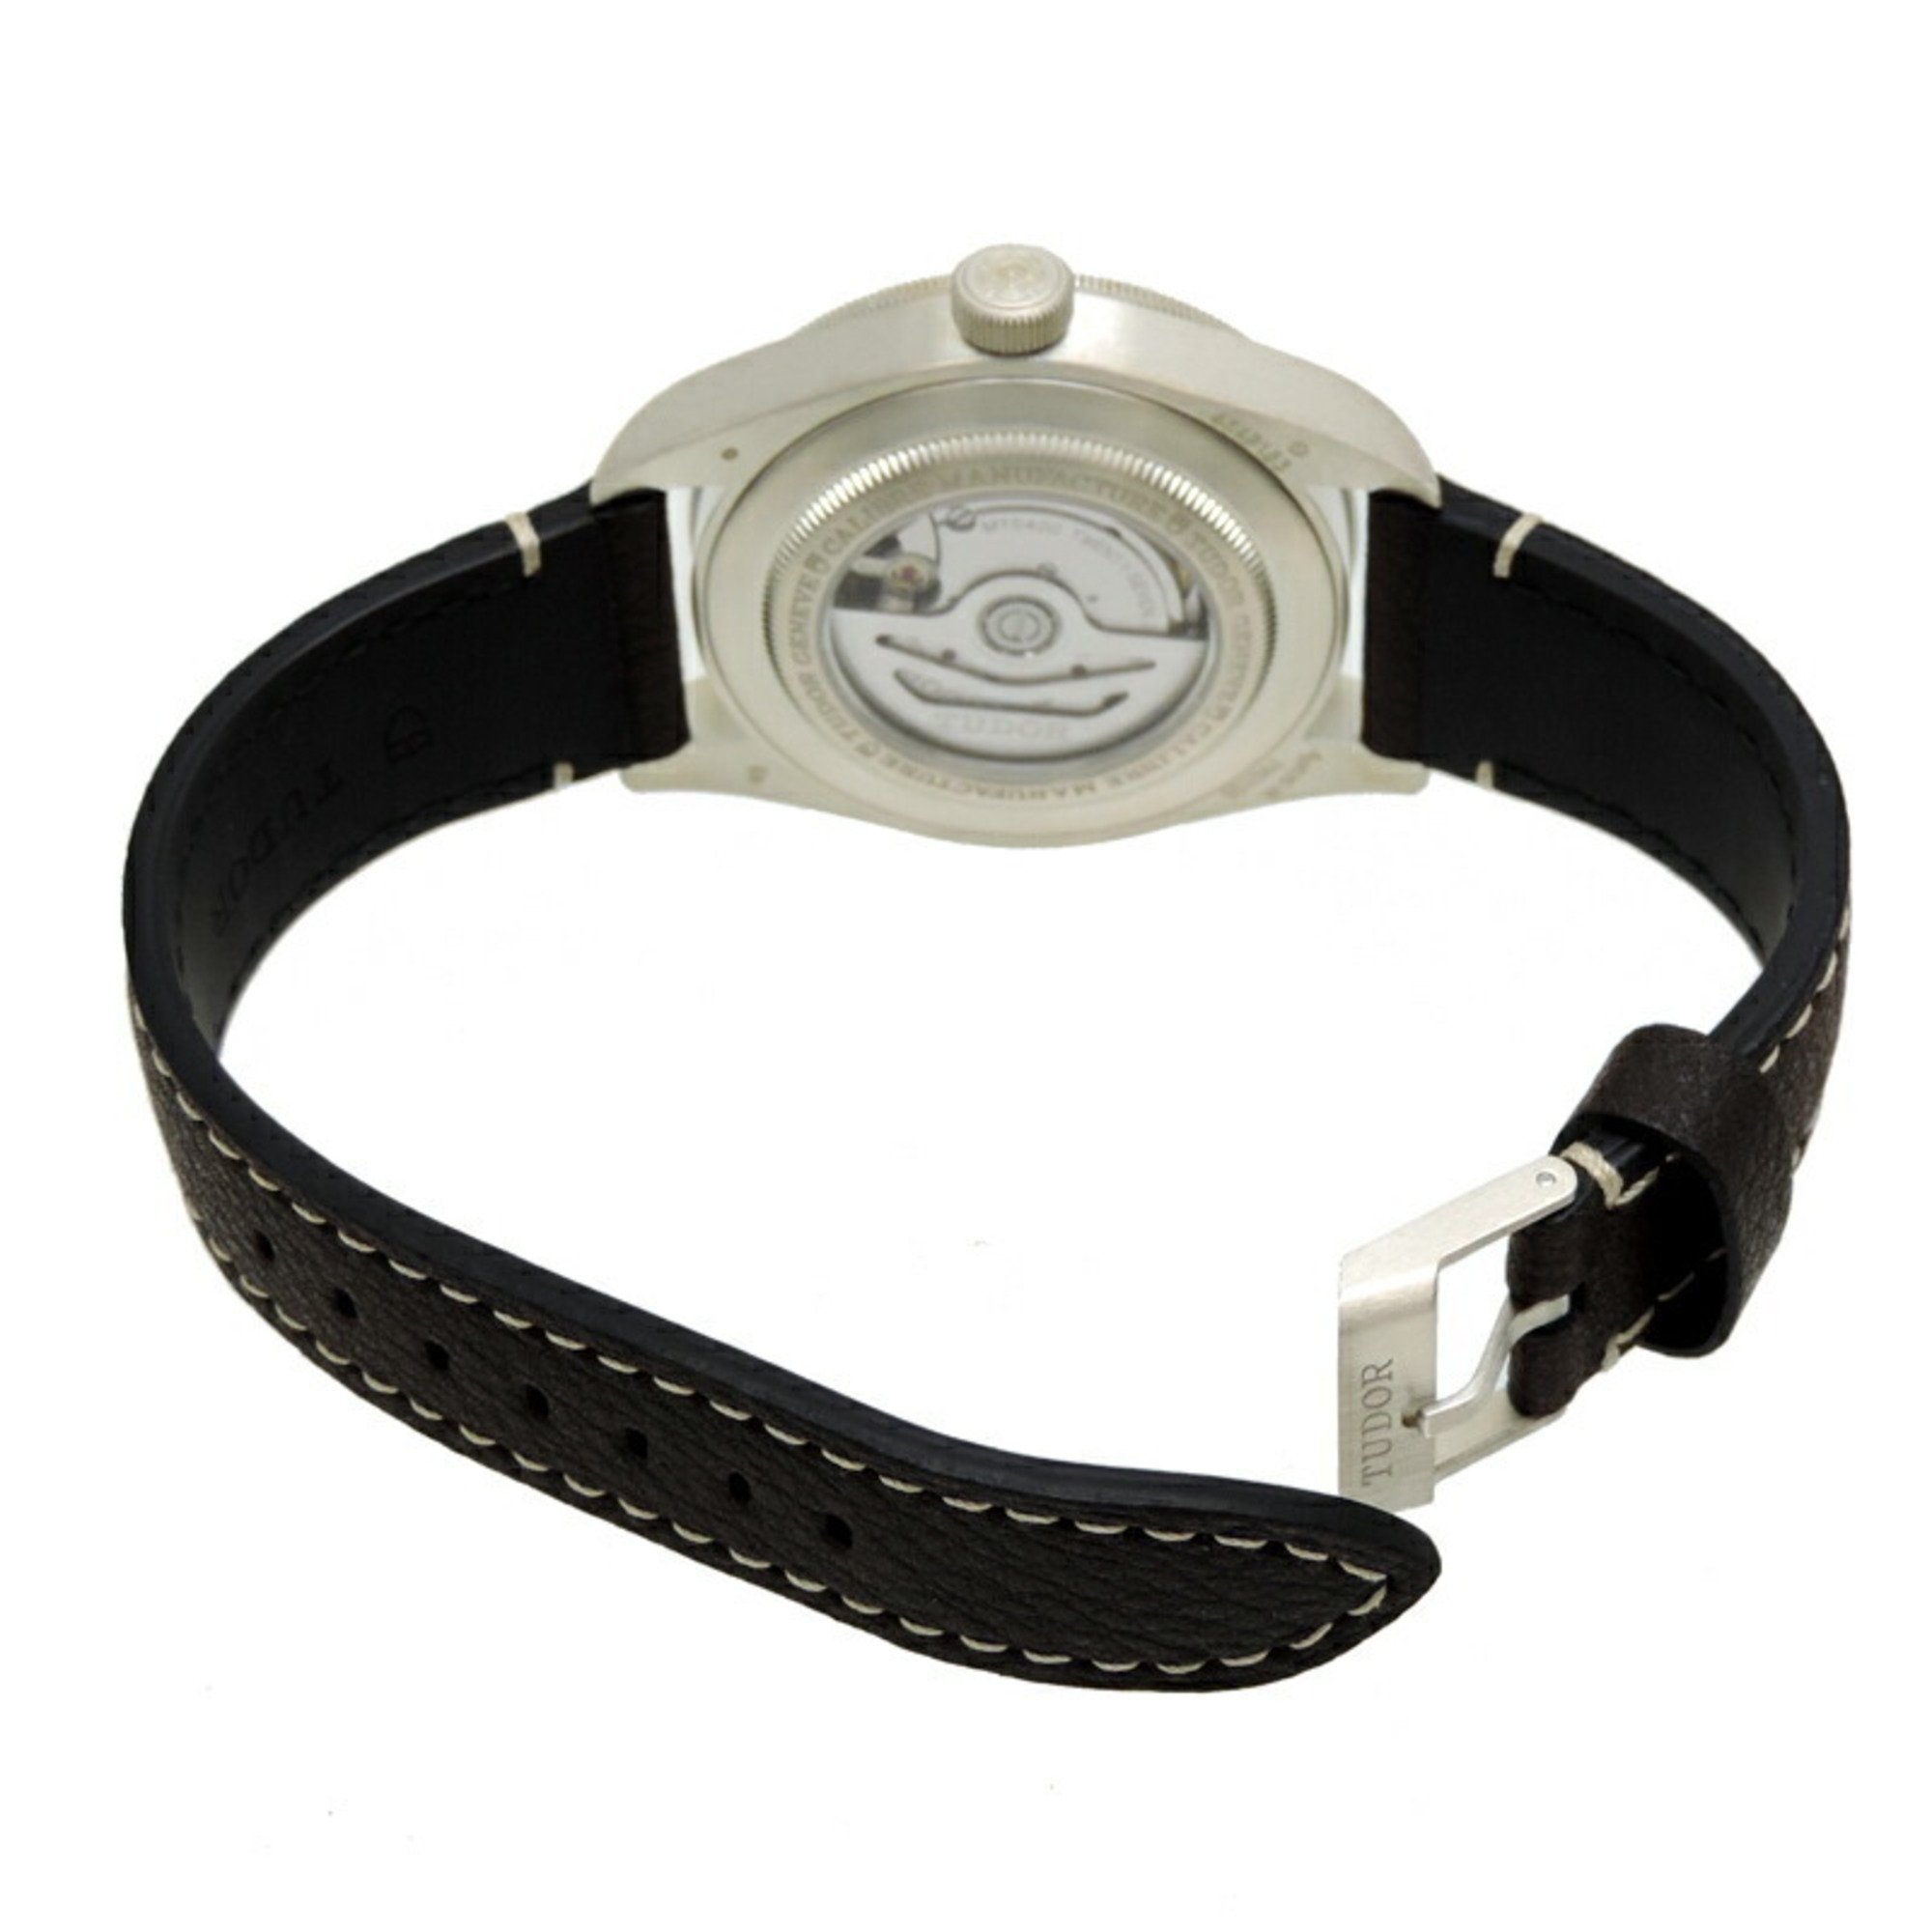 Tudor Black Bay Fifty-Eight 925 2022 Purchase Men's Watch 79010SG